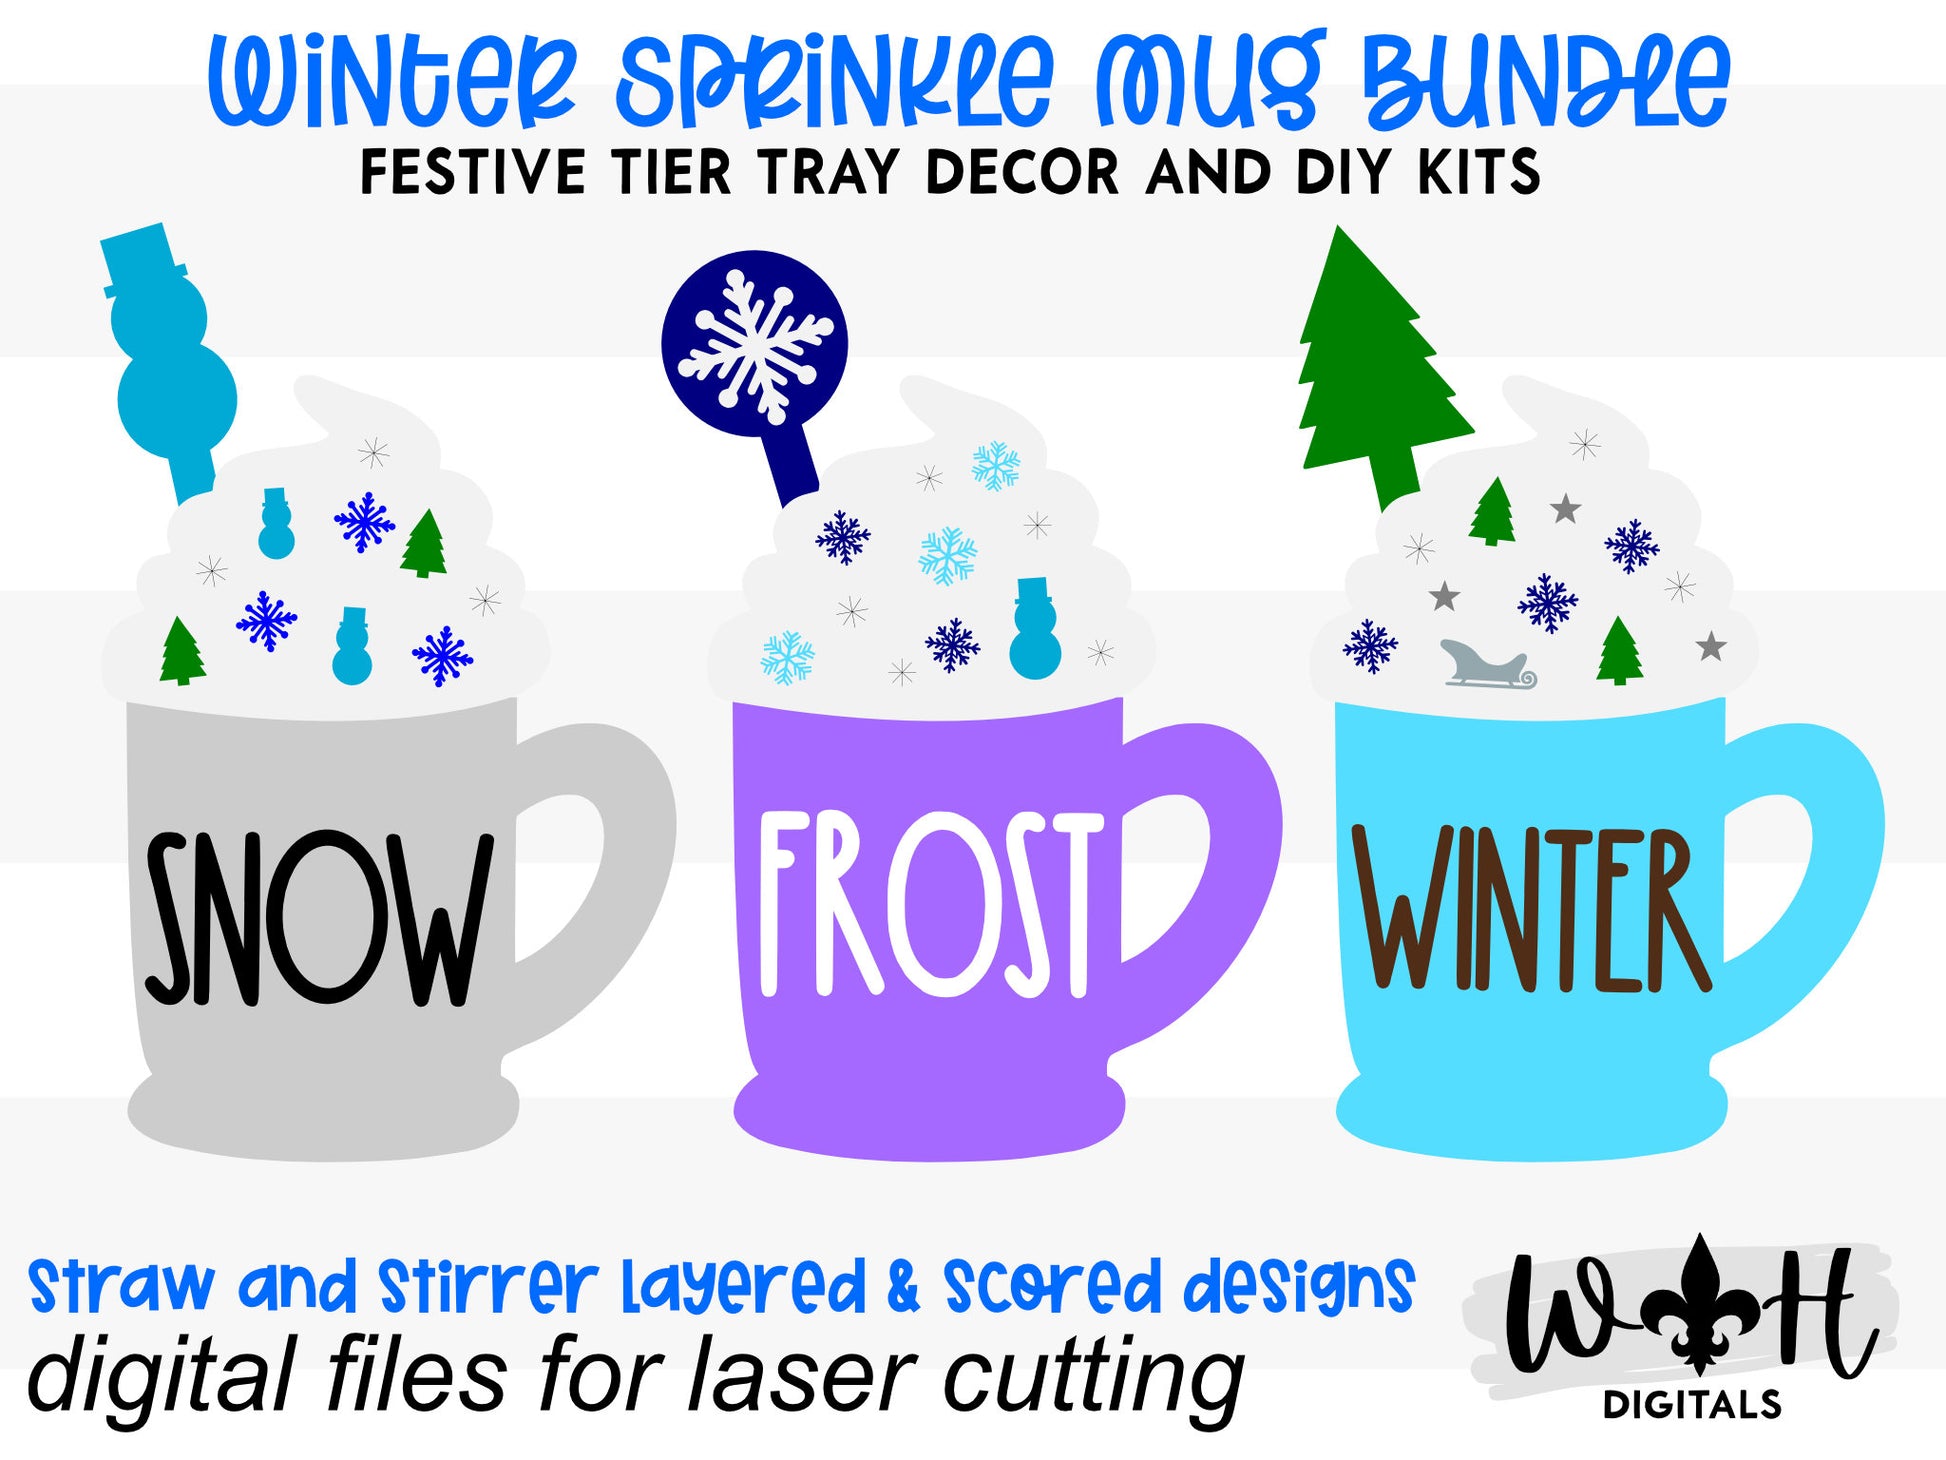 Winter Sprinkle Mugs Bundle - Seasonal Tiered Tray Decor and DIY Kits - Cut File For Glowforge Lasers - Digital SVG File